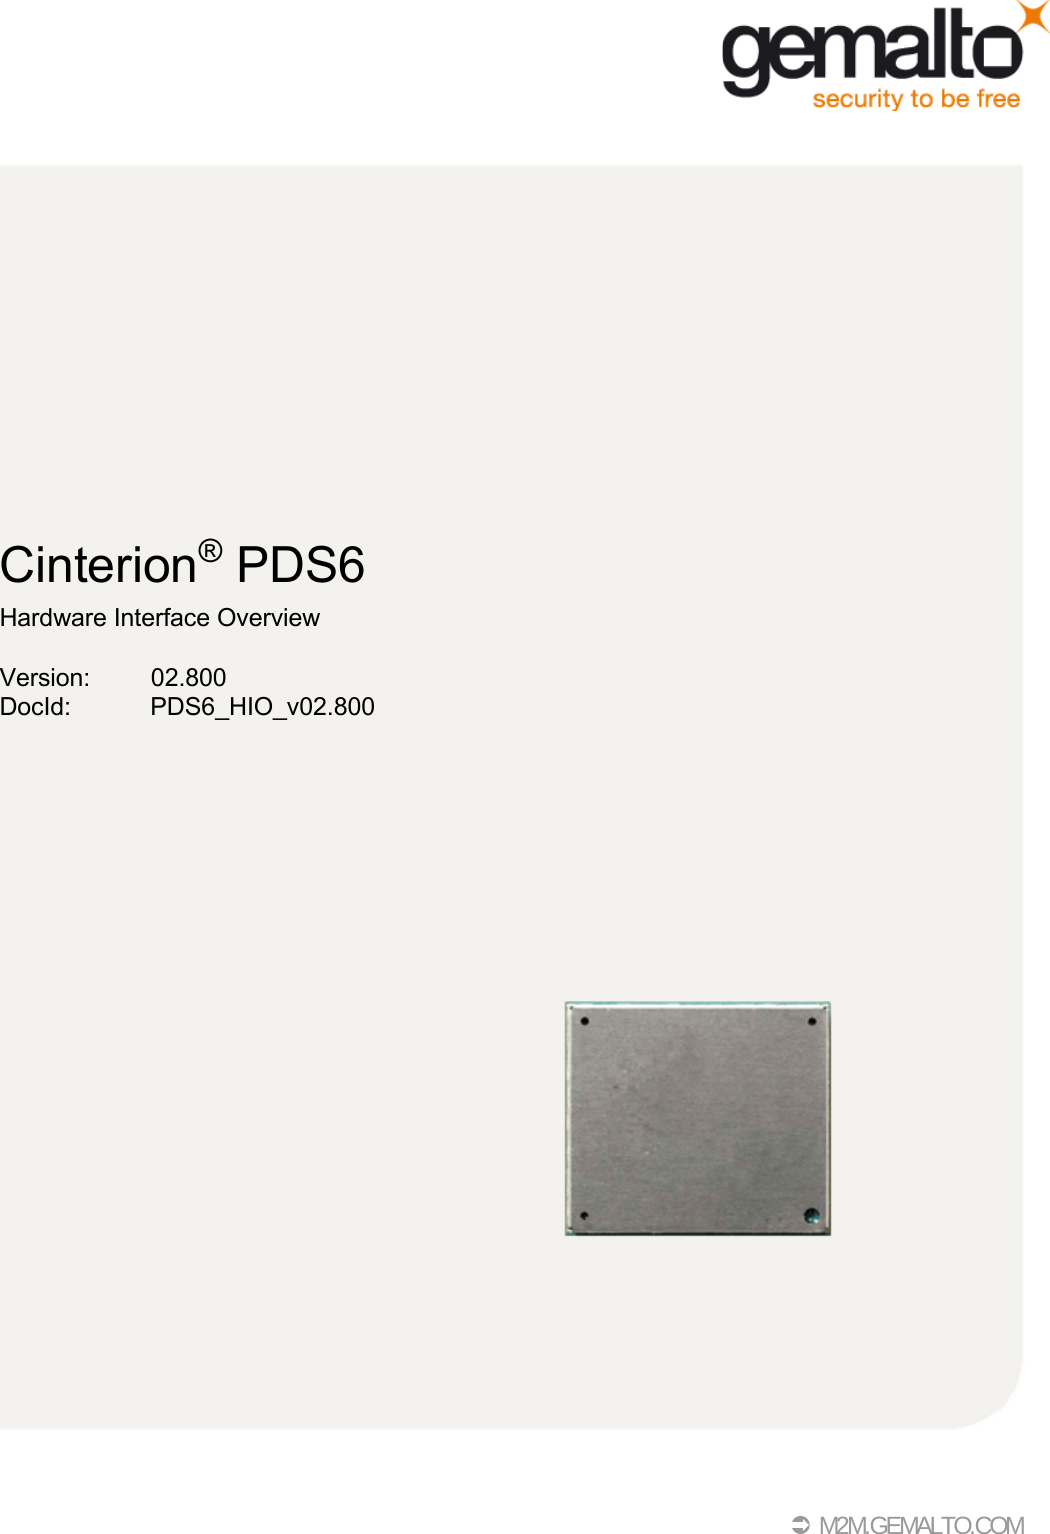                     Cinterion®  PDS6 Hardware Interface Overview Version:  02.800 DocId:  PDS6_HIO_v02.800                            M2M.GEMALTO.COM 